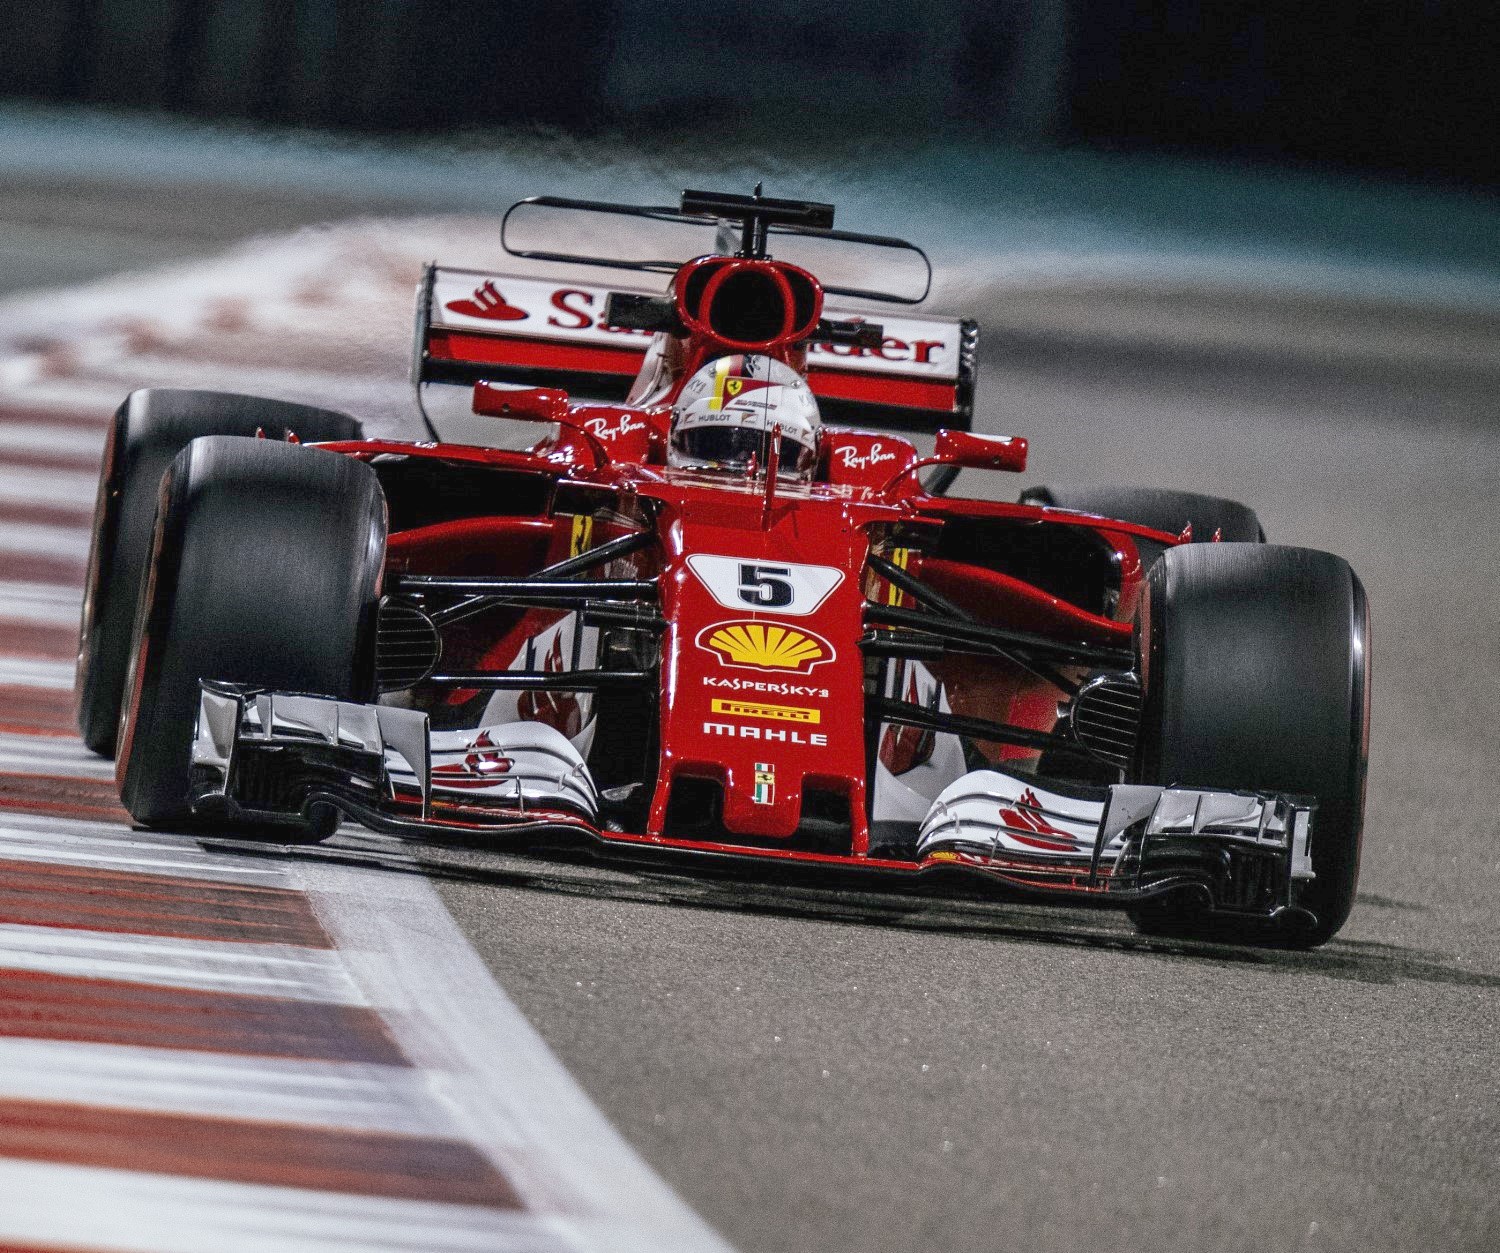 Vettel was behind Hamilton the same amount Hamilton was behind him in Practice 1